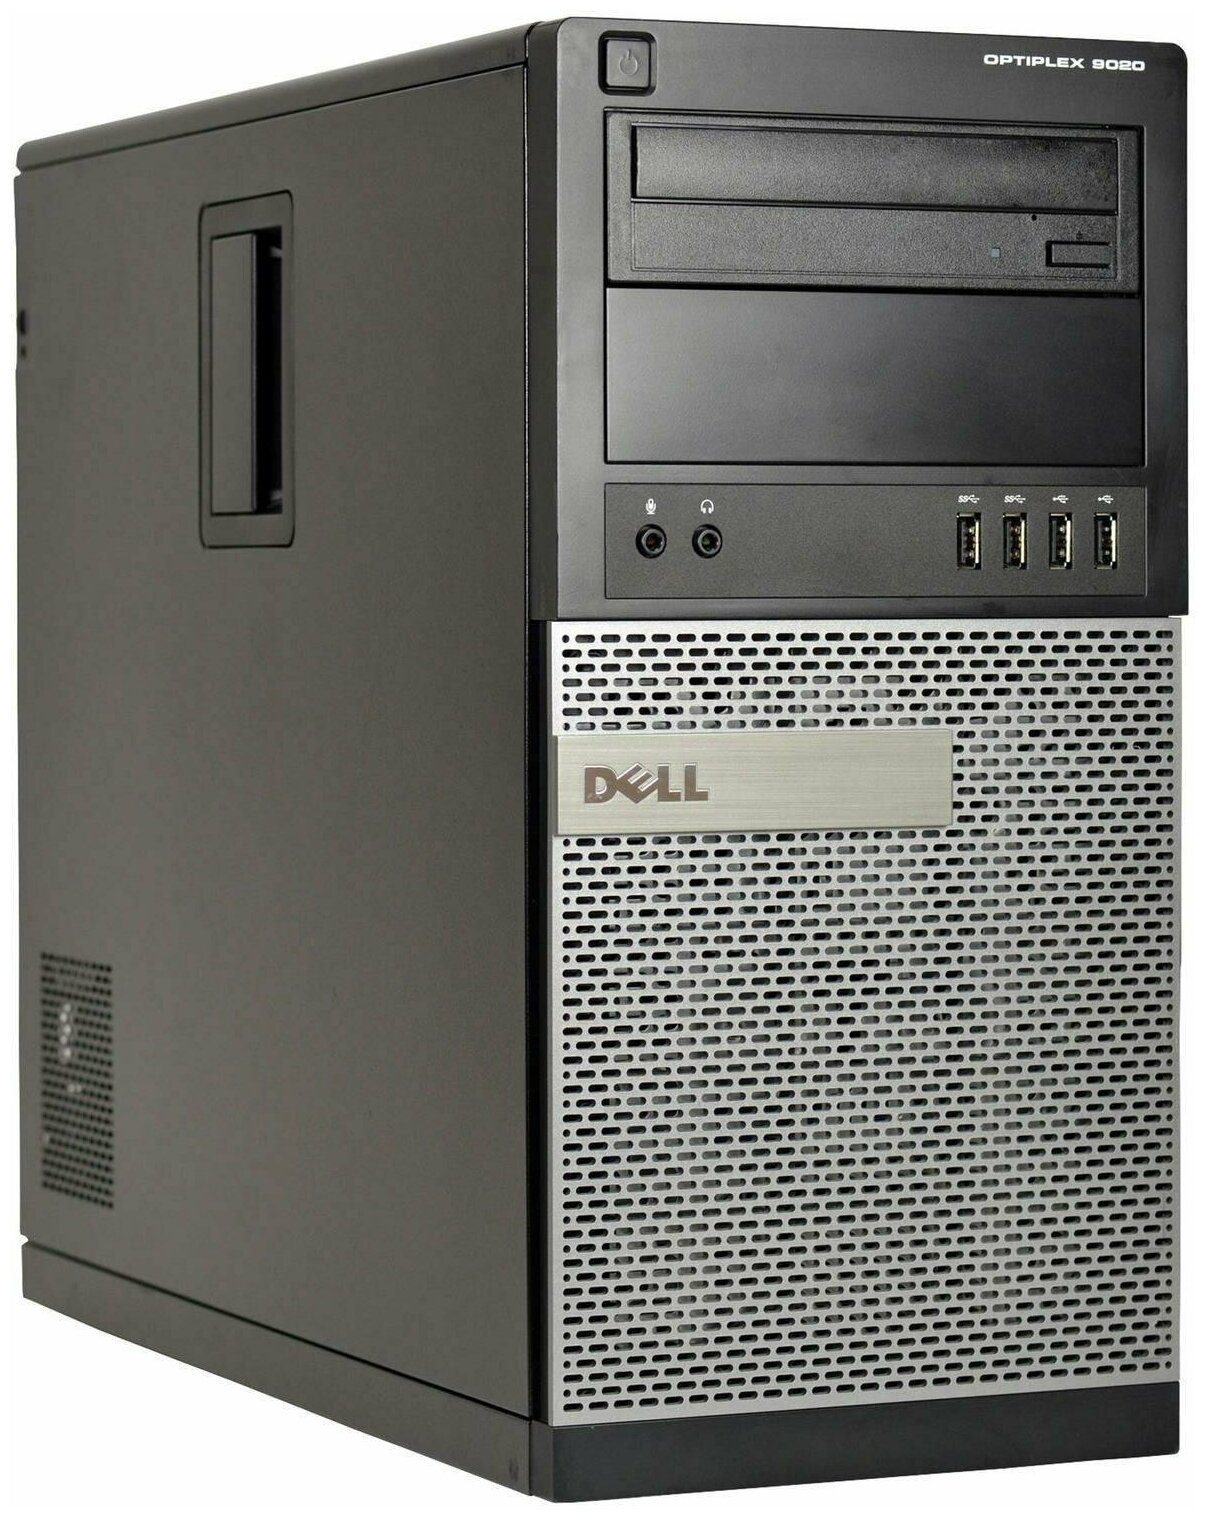 Системный блок, компьютер Dell Optiplex 3020 - Core i5-4570, 8GB RAM, 500GB HDD